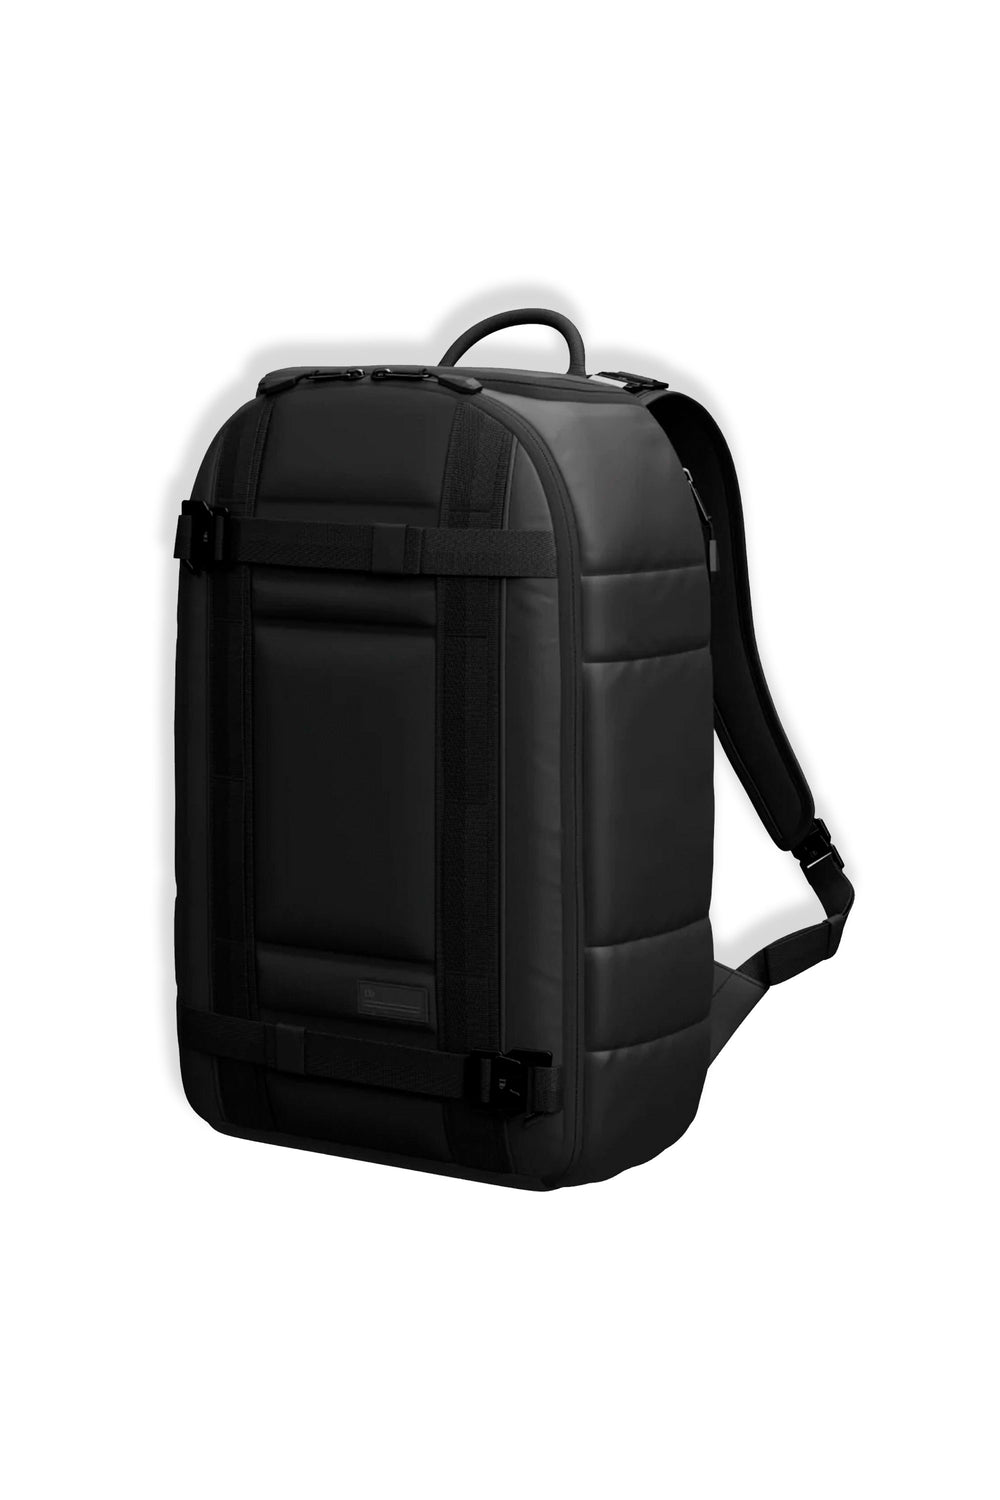 Pukas-Surf-Shop-Db-journey-backpack-the-ramverk-26l-black